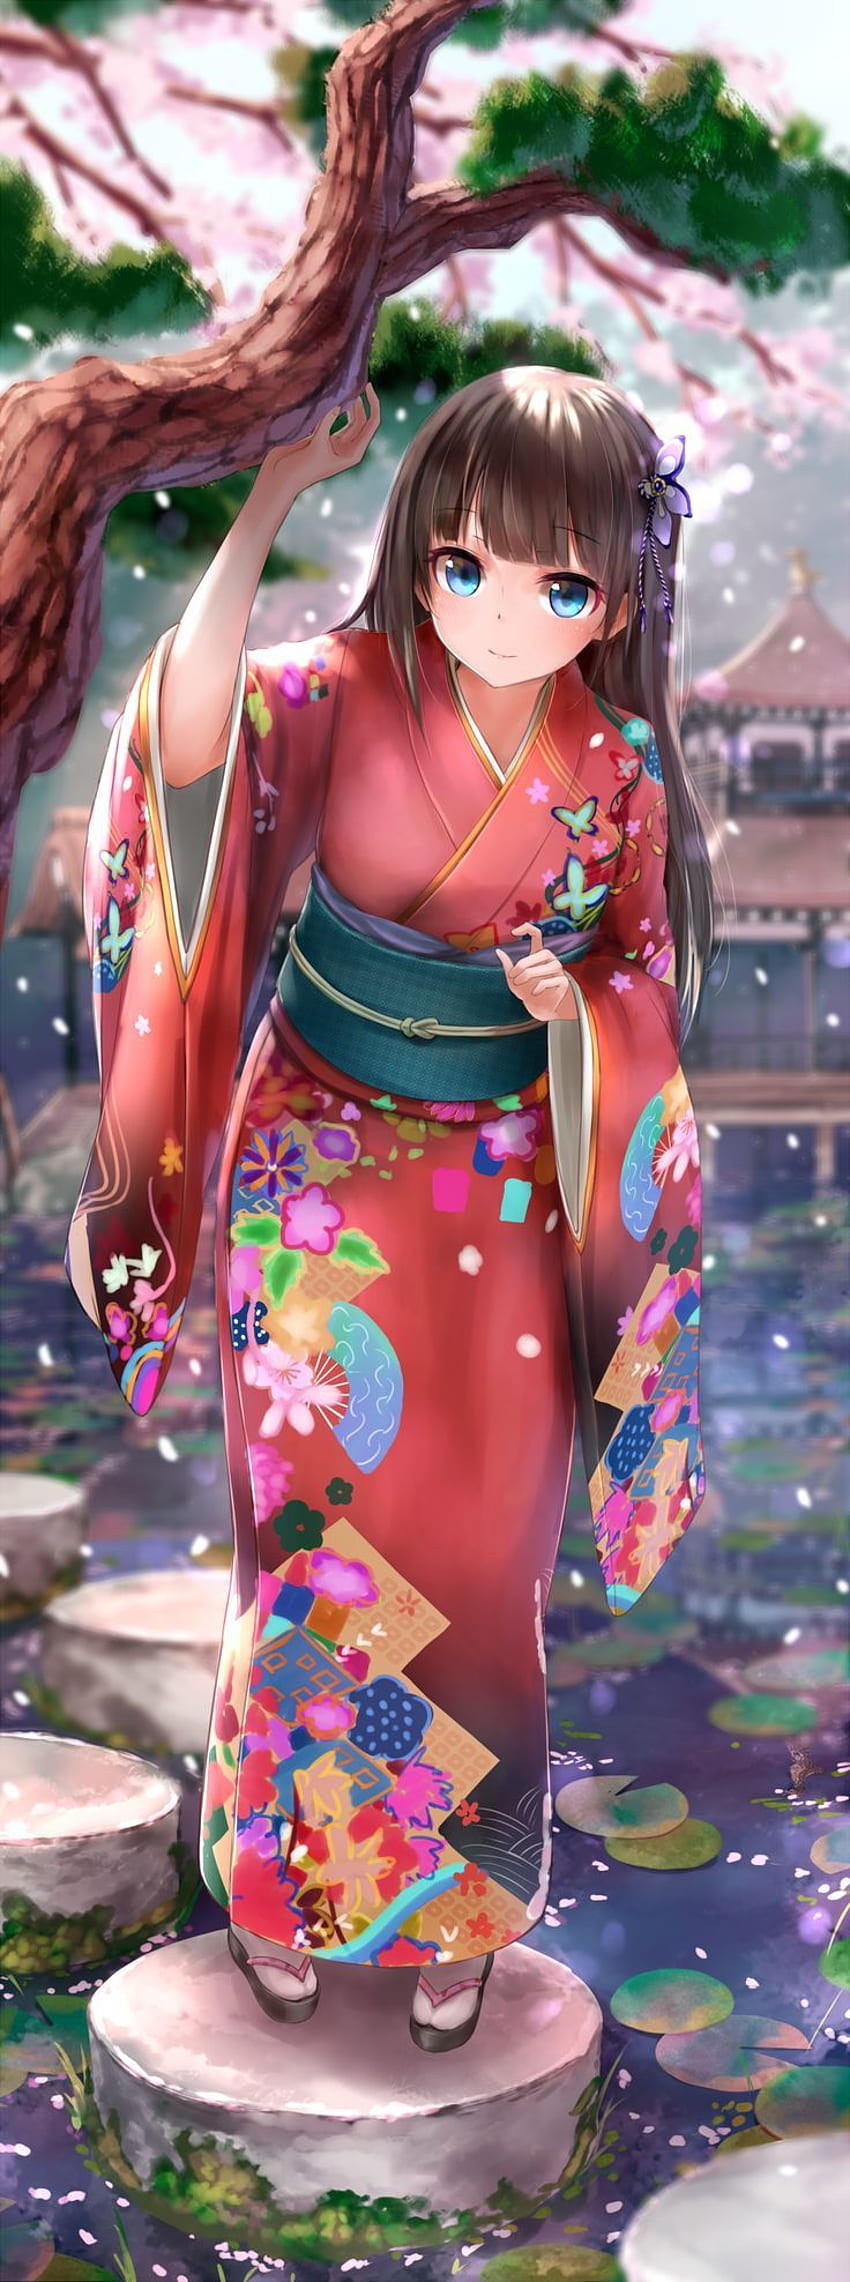 anime girl kimono Picture #131615585 | Blingee.com